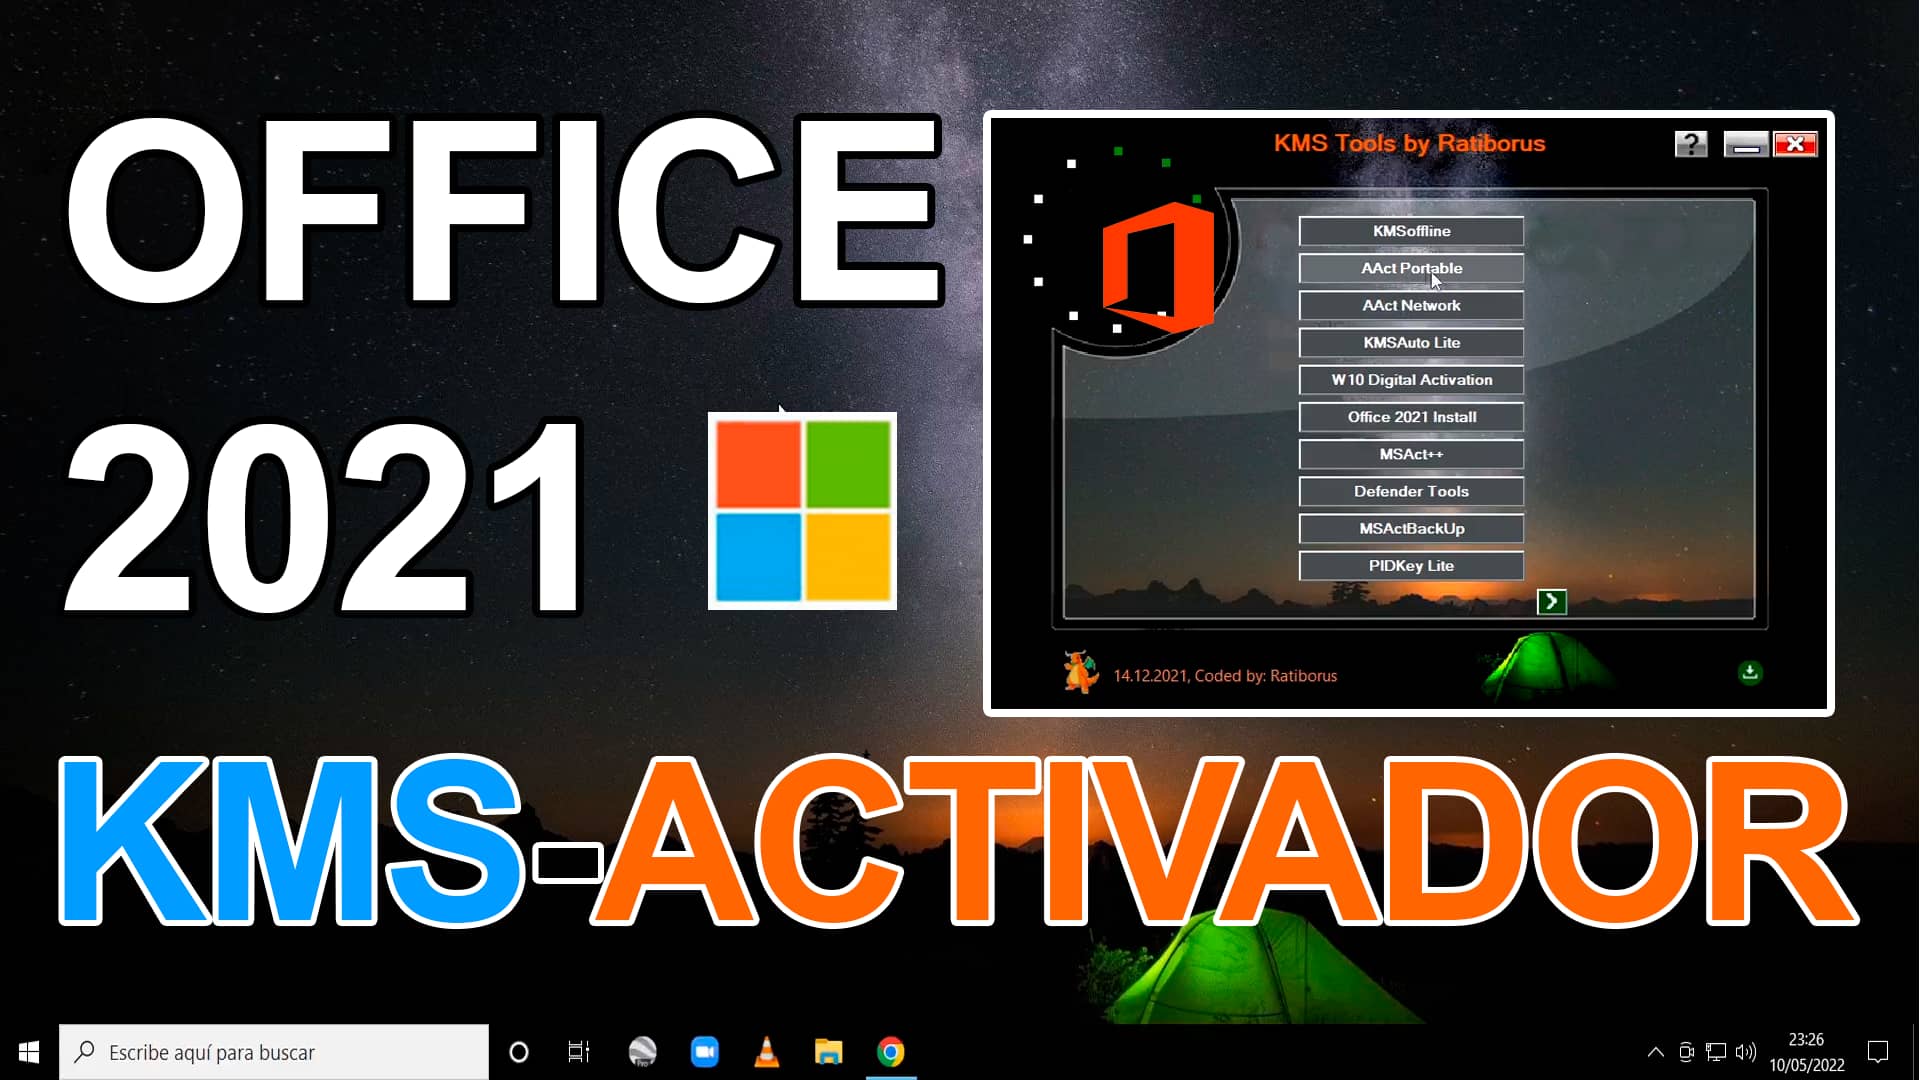 Activar Office 2021 Con Kms Tools Activator Como Activar Office 2021 On Vimeo 4642